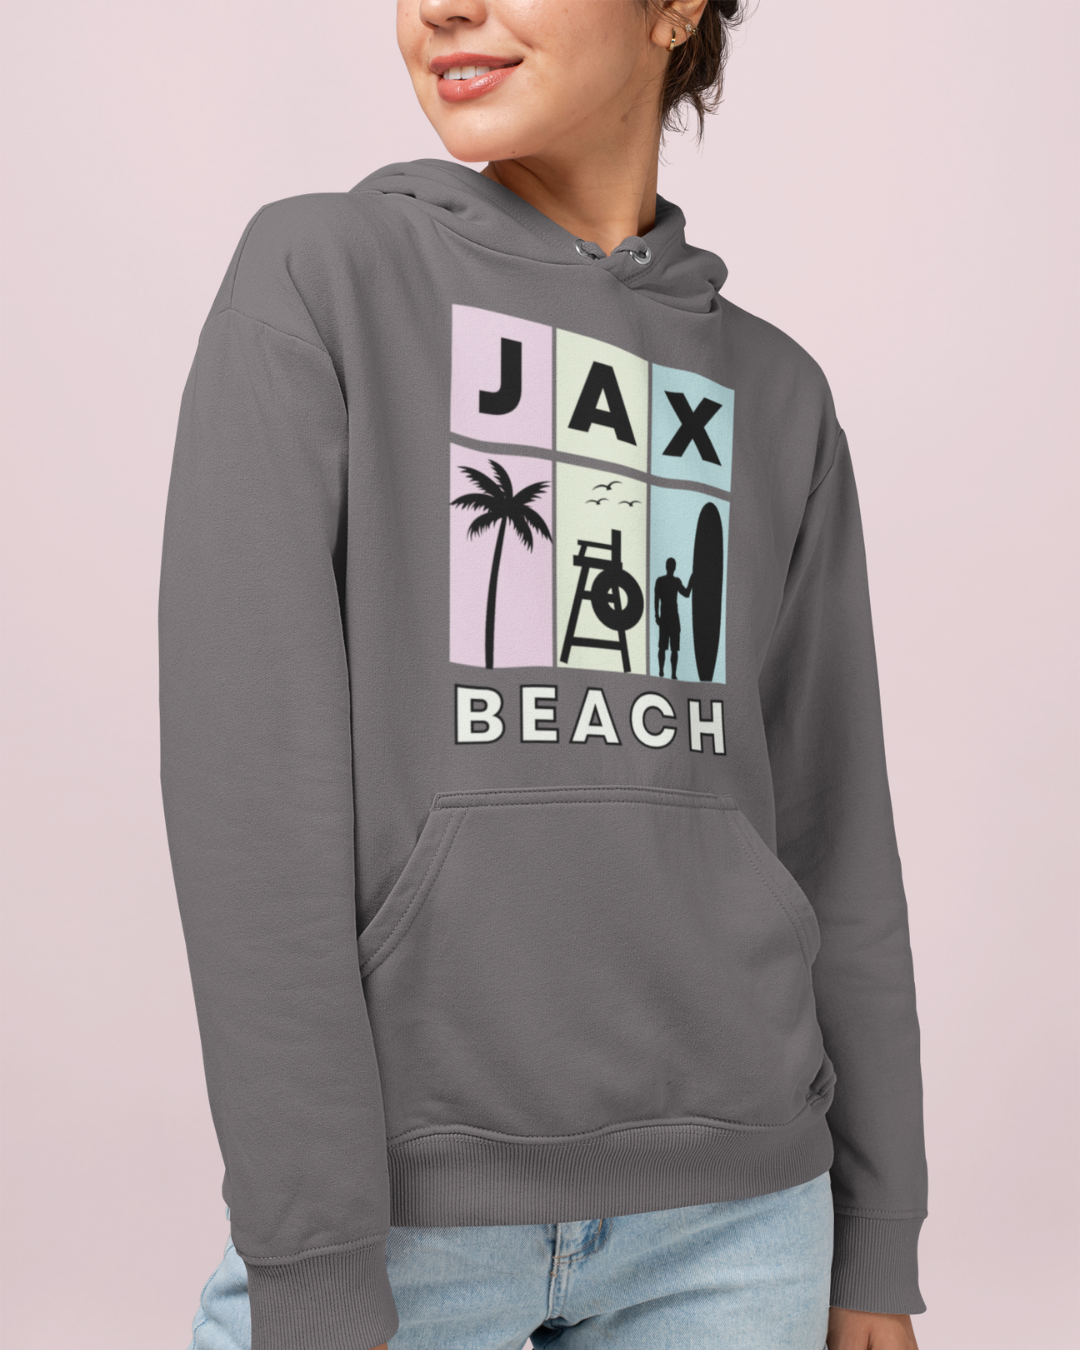 Jax Beach Long Sleeve UV, Powder Blue / 2x